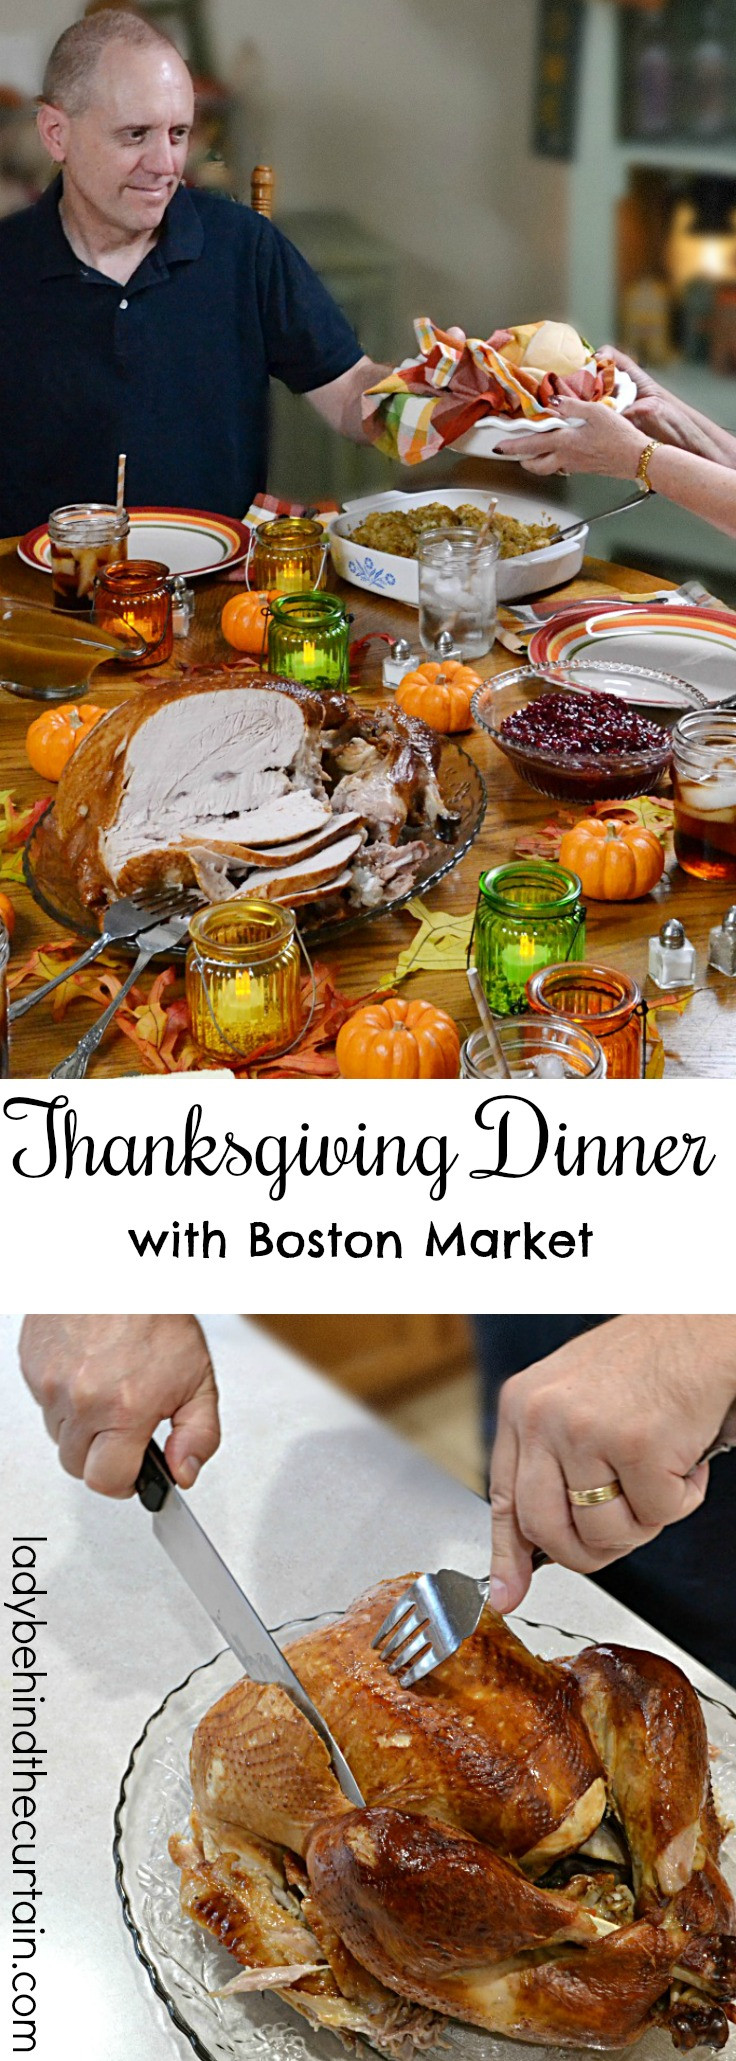 Boston Market Thanksgiving Dinners
 Thanksgiving Dinner with Boston Market